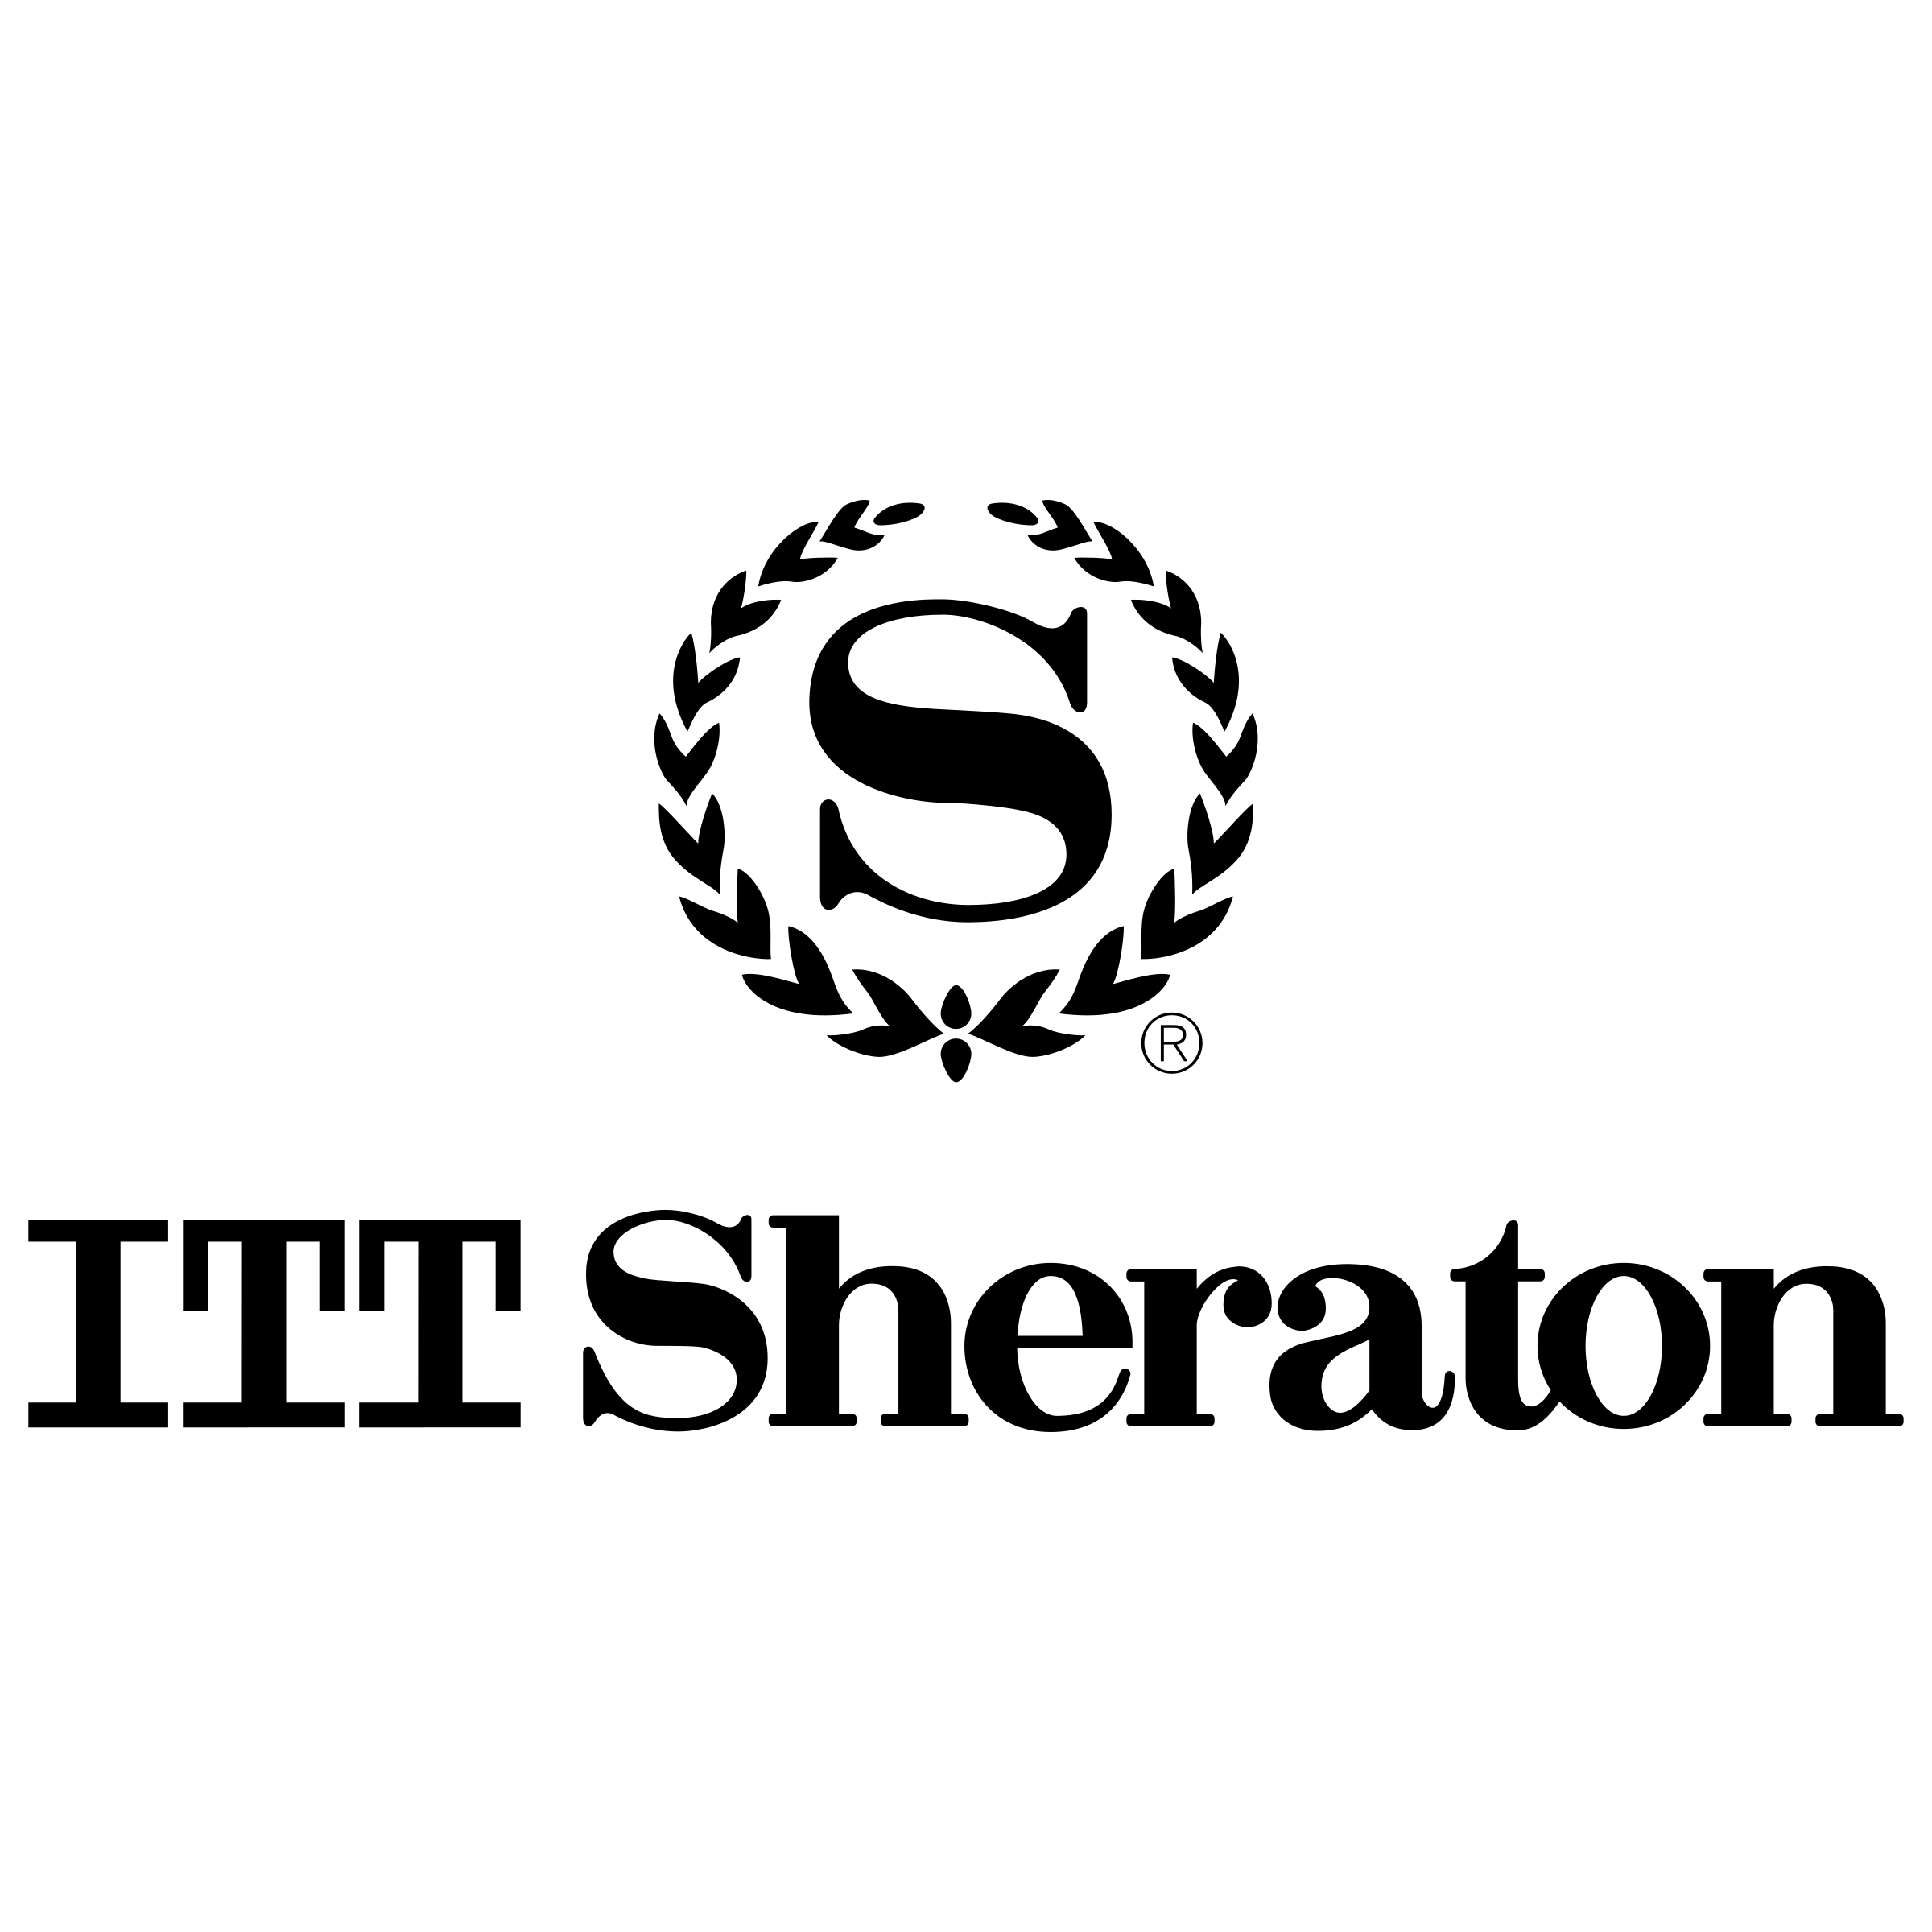 Sheraton Logo - ITT Sheraton Logo PNG Transparent & SVG Vector - Freebie Supply